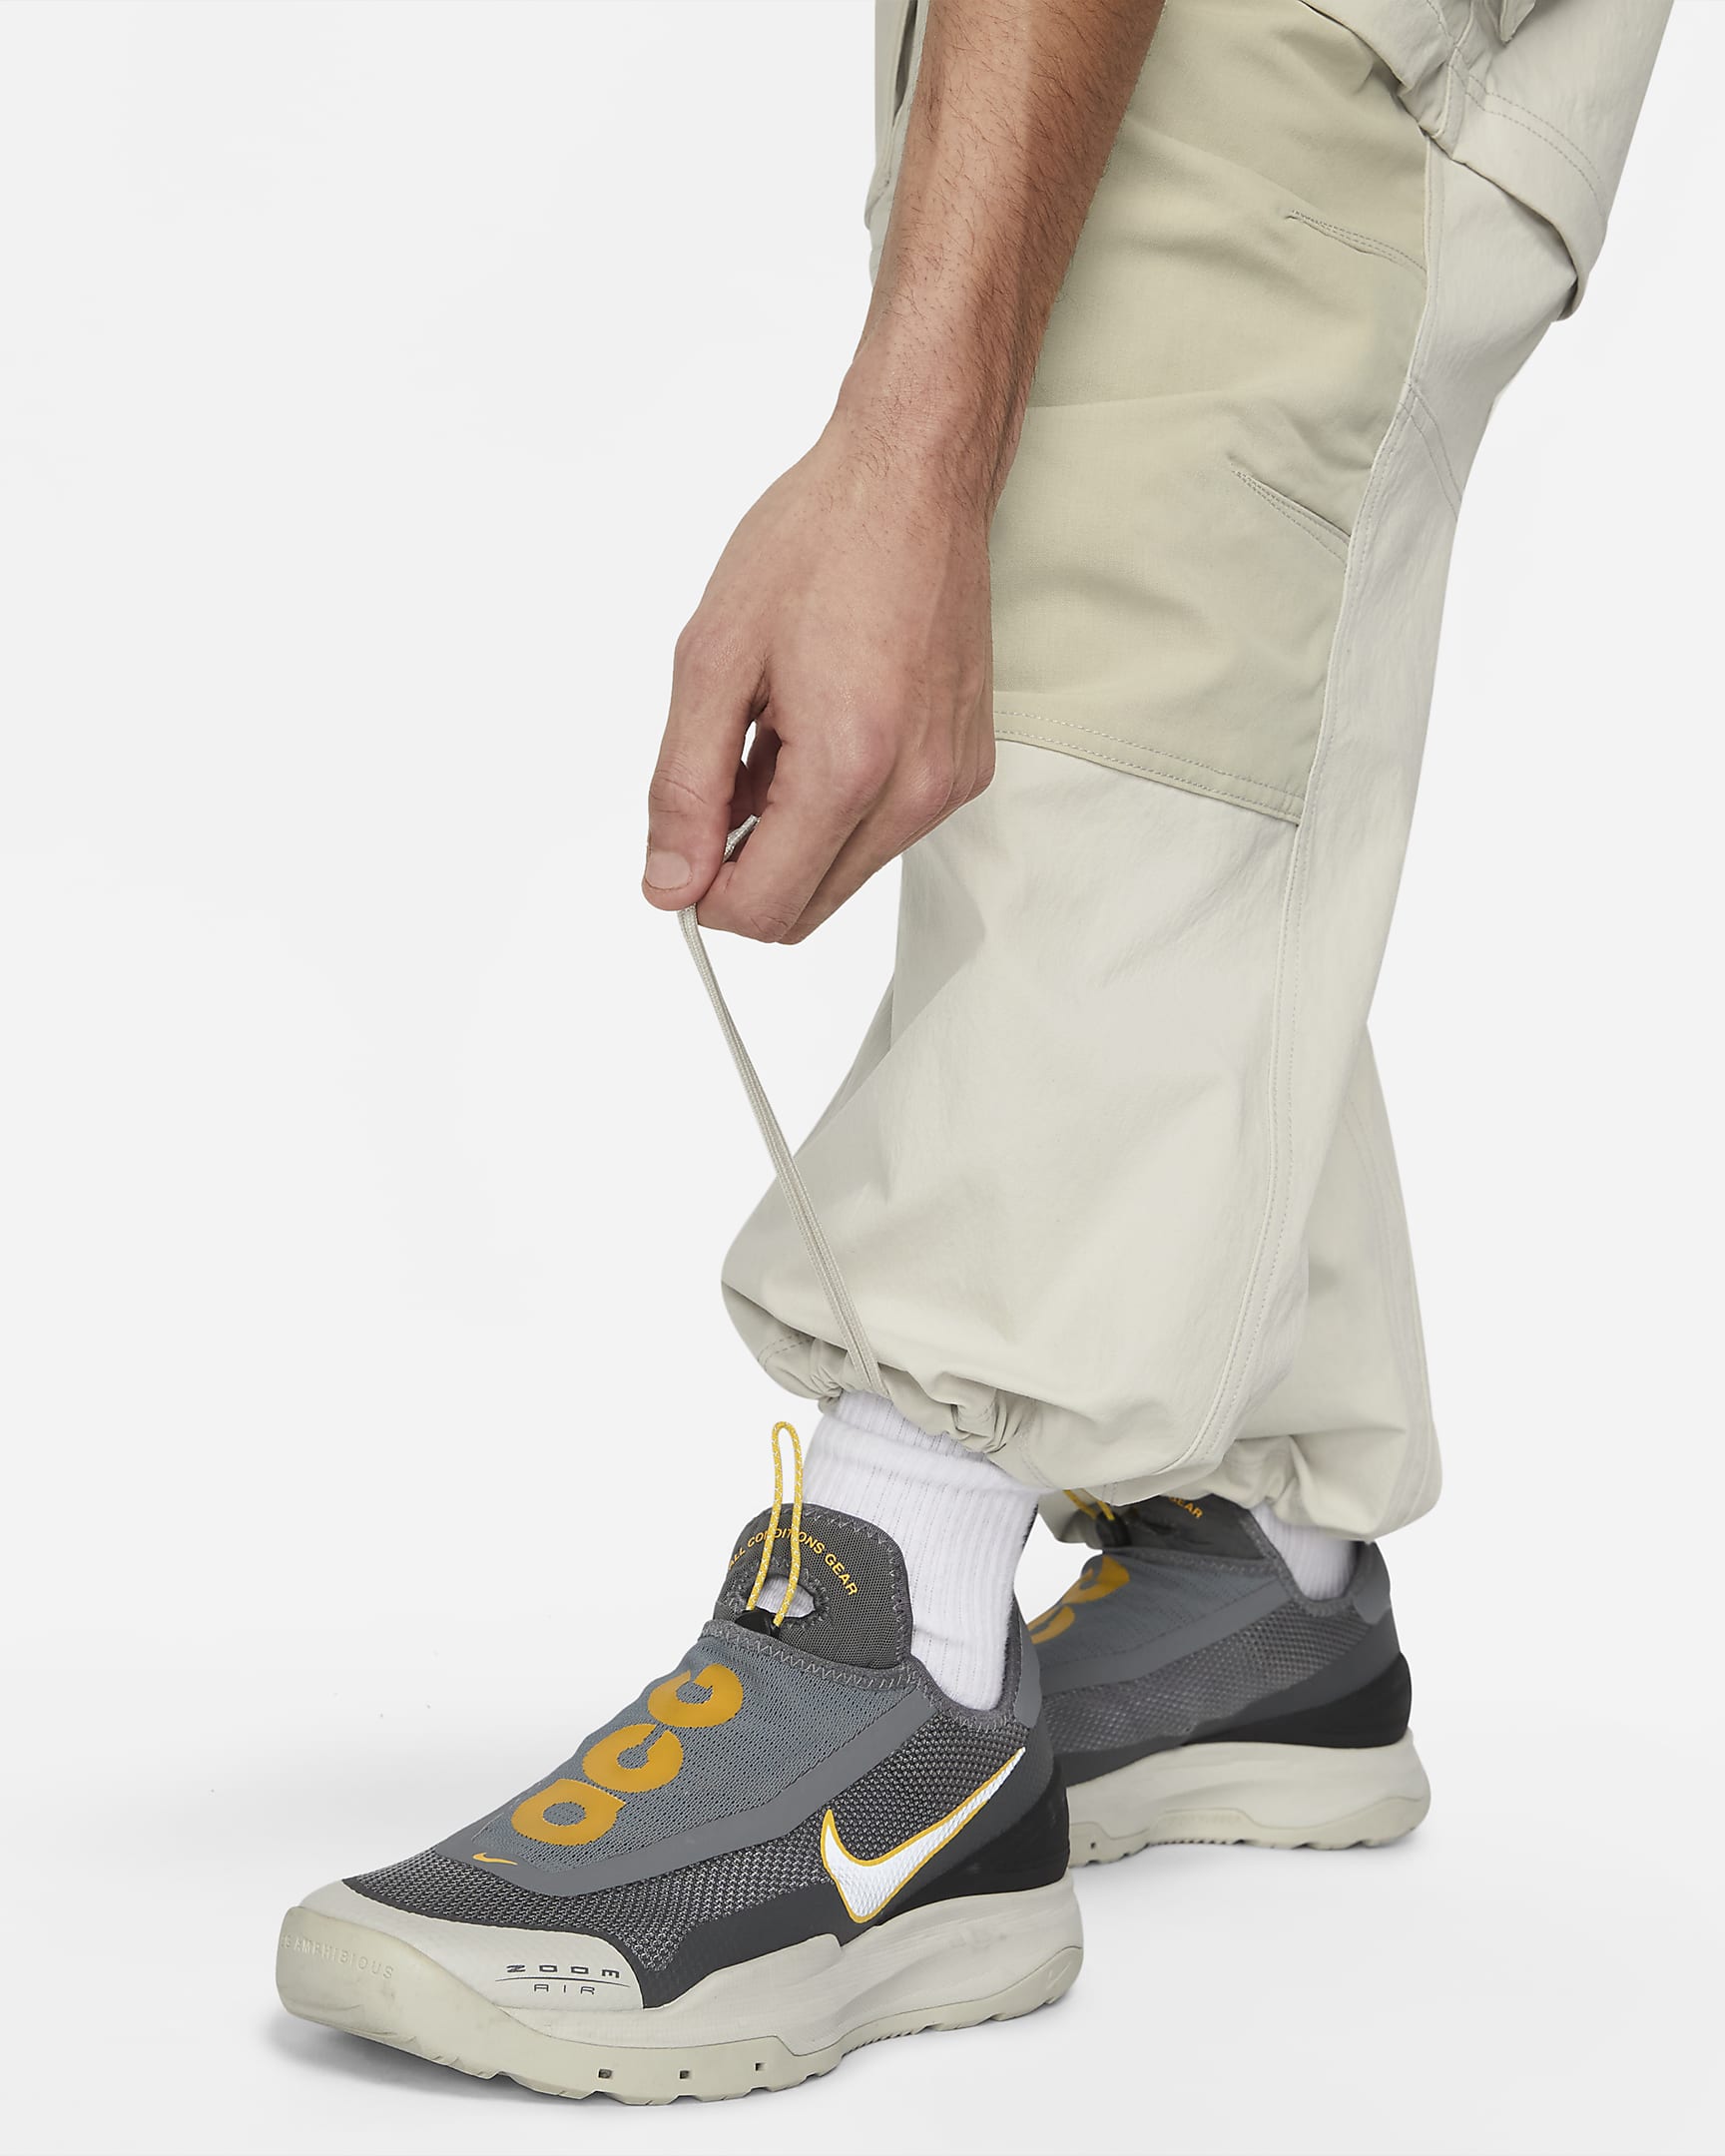 Nike ACG 'Smith Summit' Men's Cargo Trousers. Nike ID